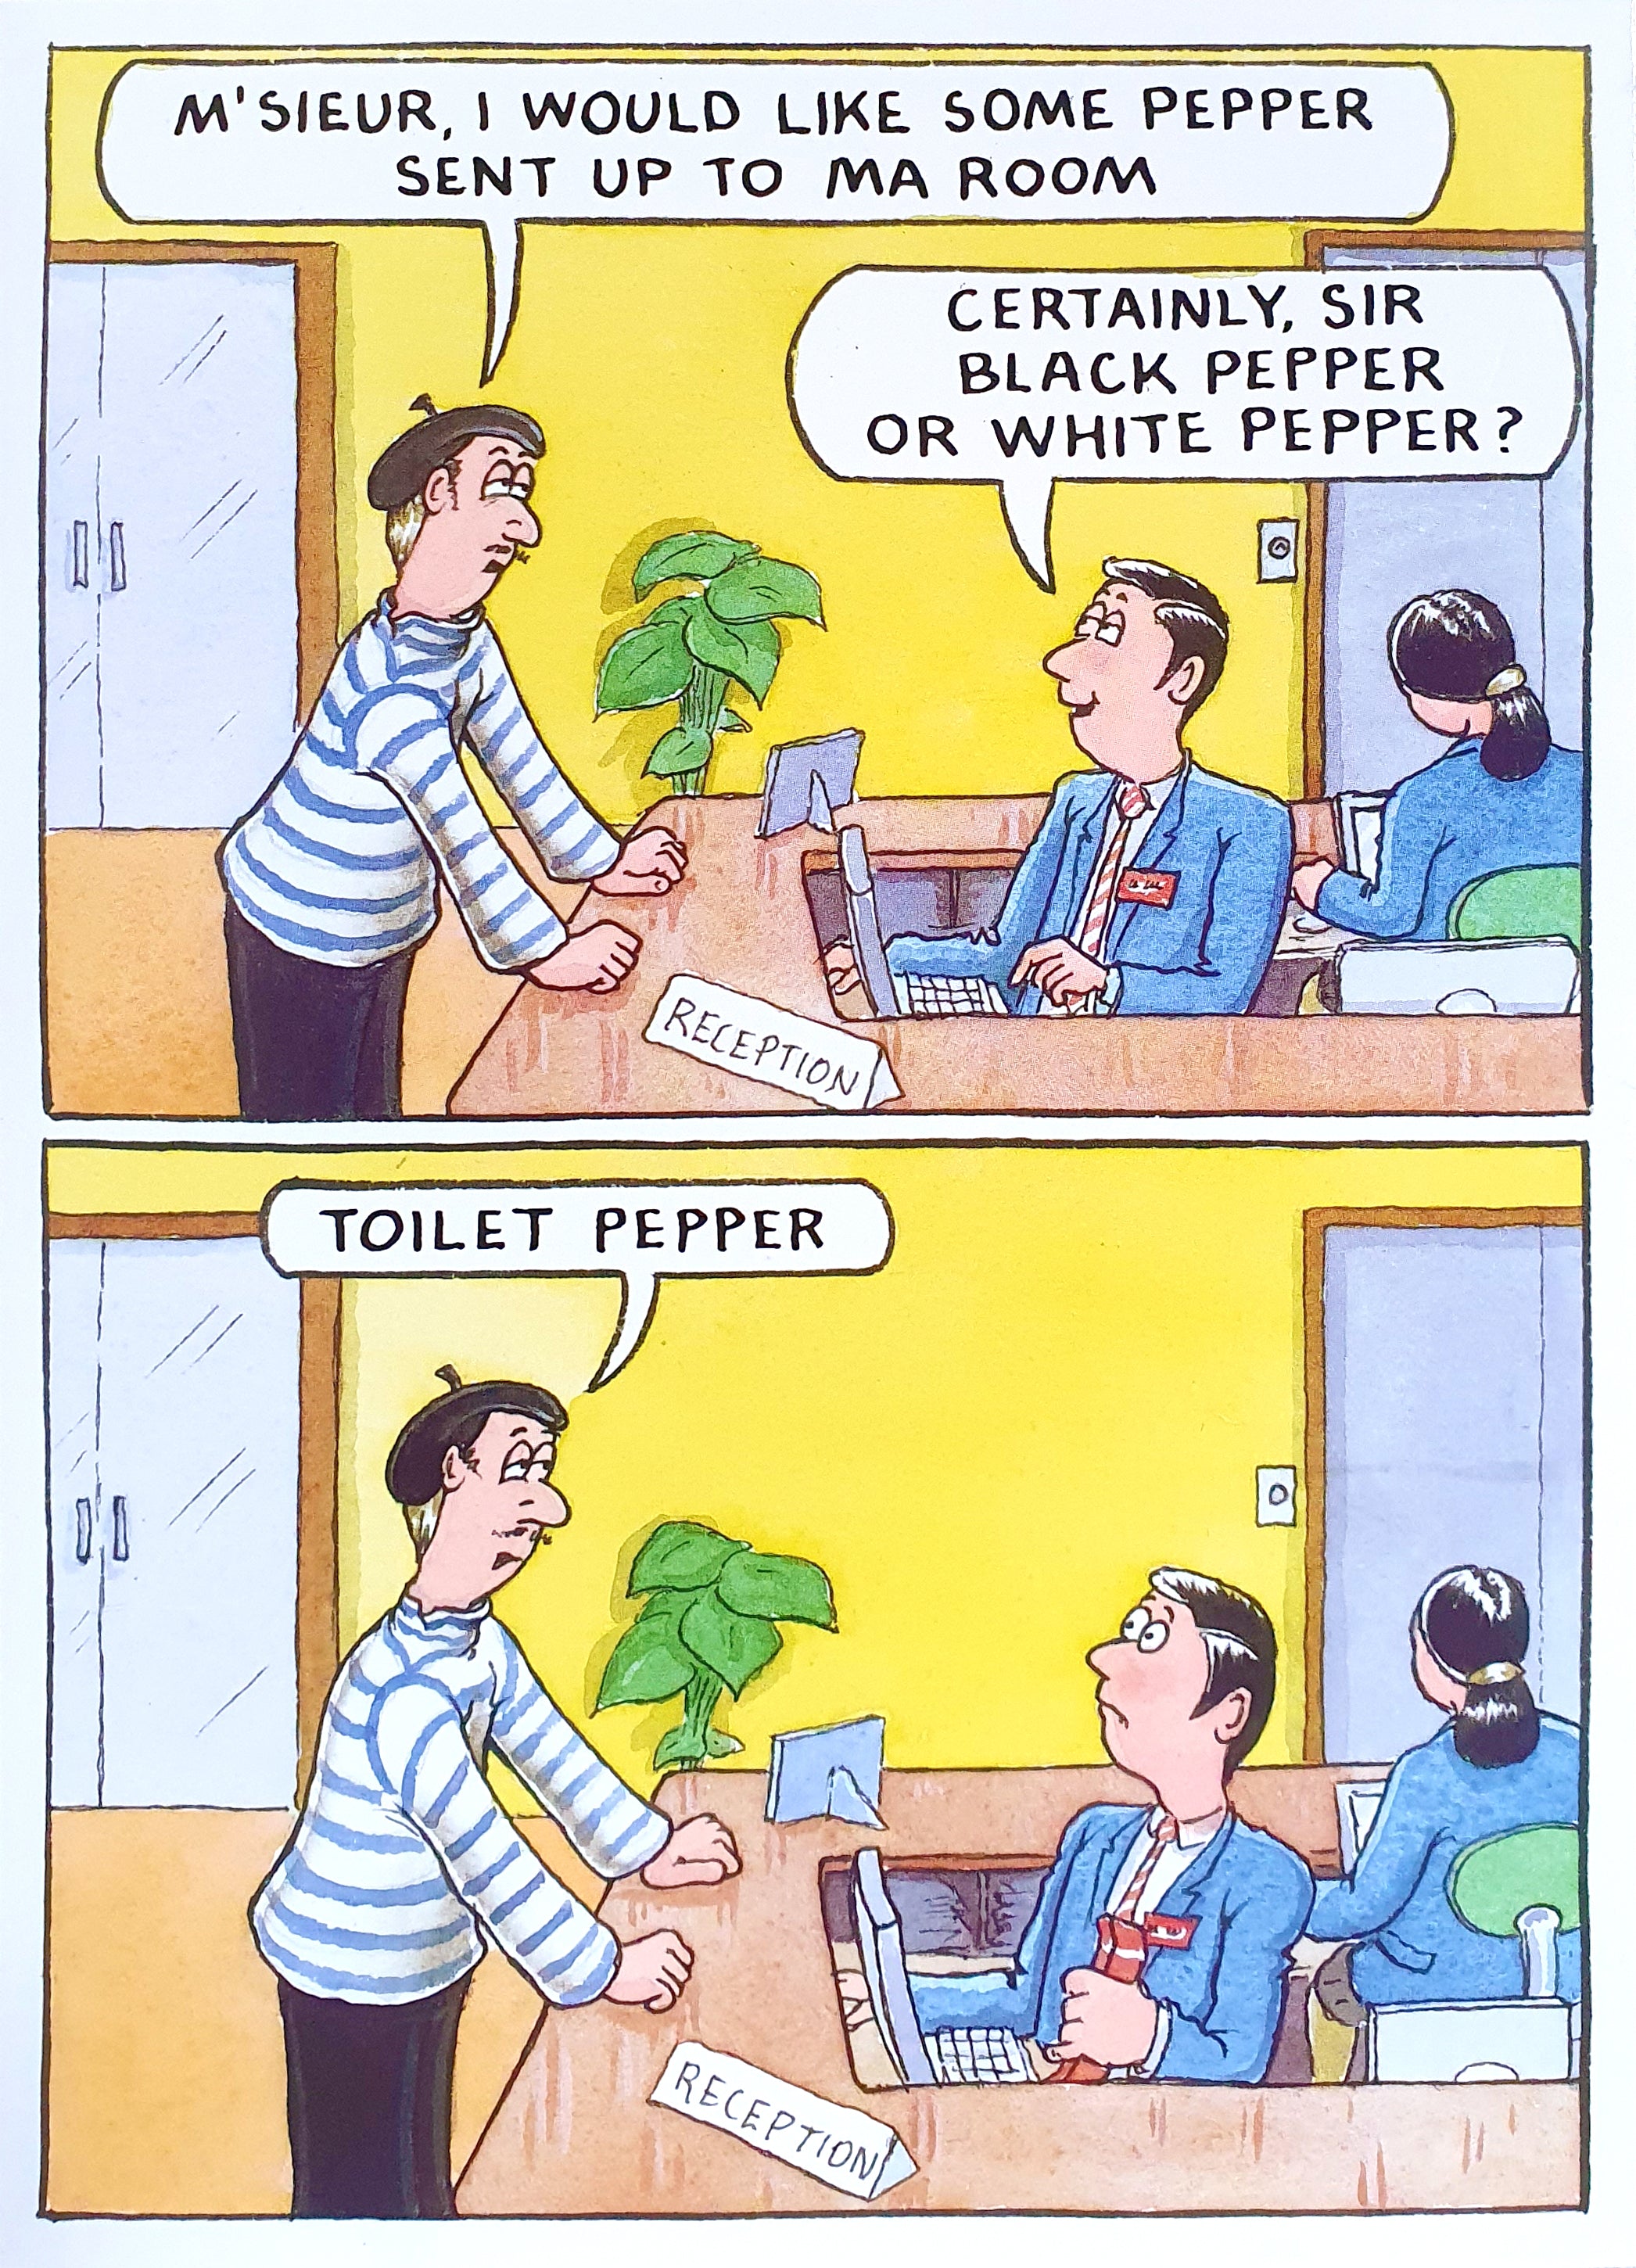 Humourous Birthday Card - Pepper